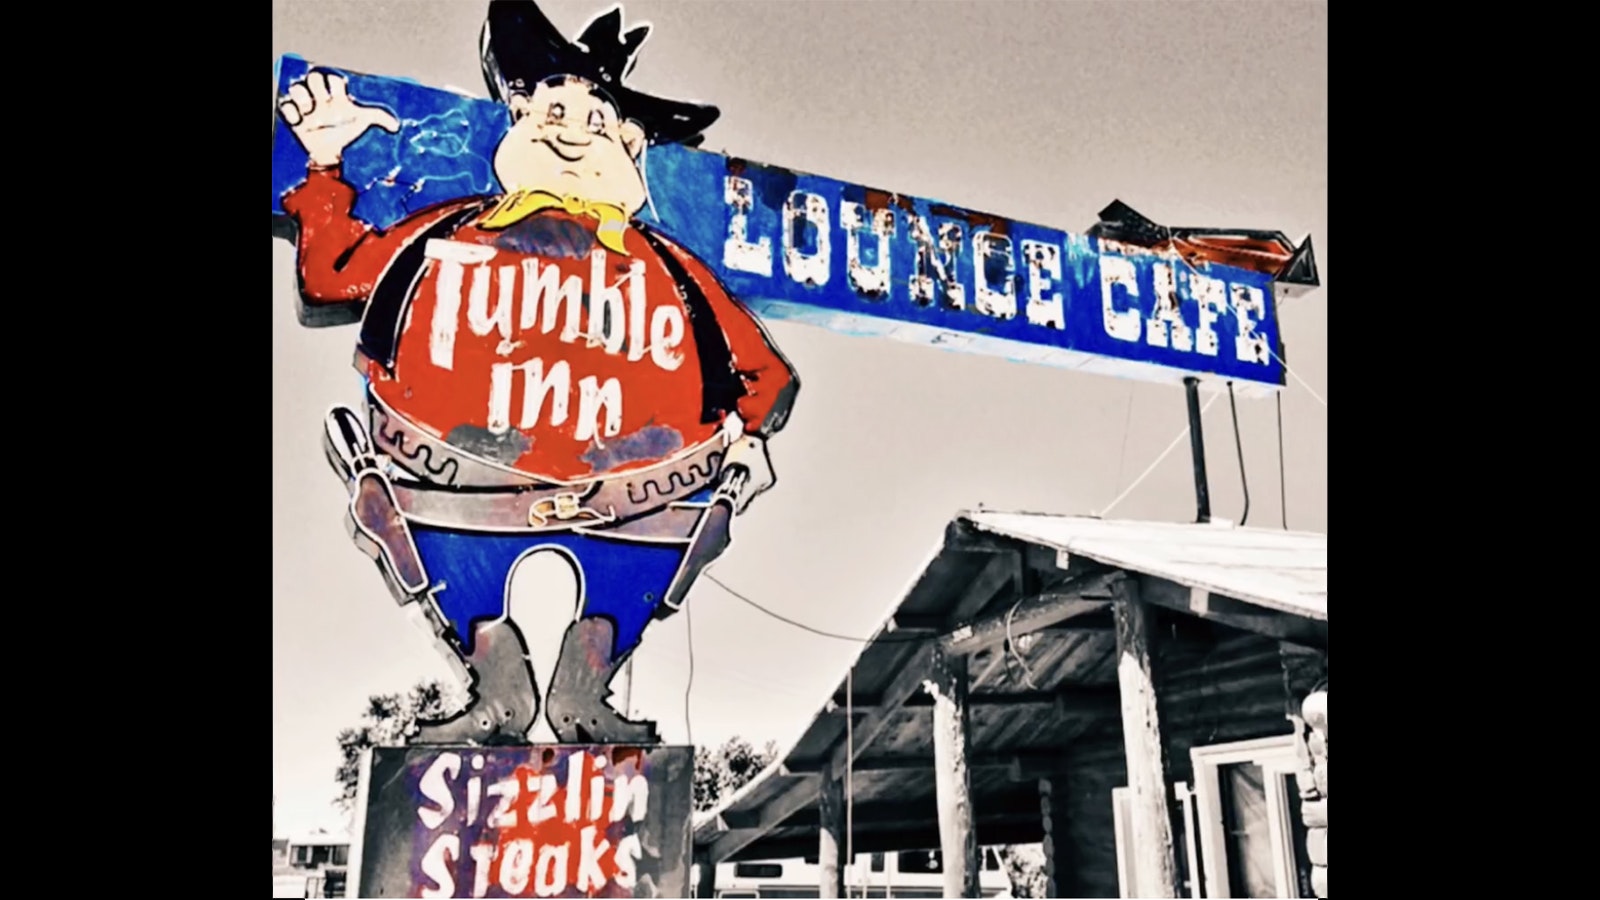 Tumble Inn A more colorful era for the cowboy sign Van Etten Natta Family 6 3 23